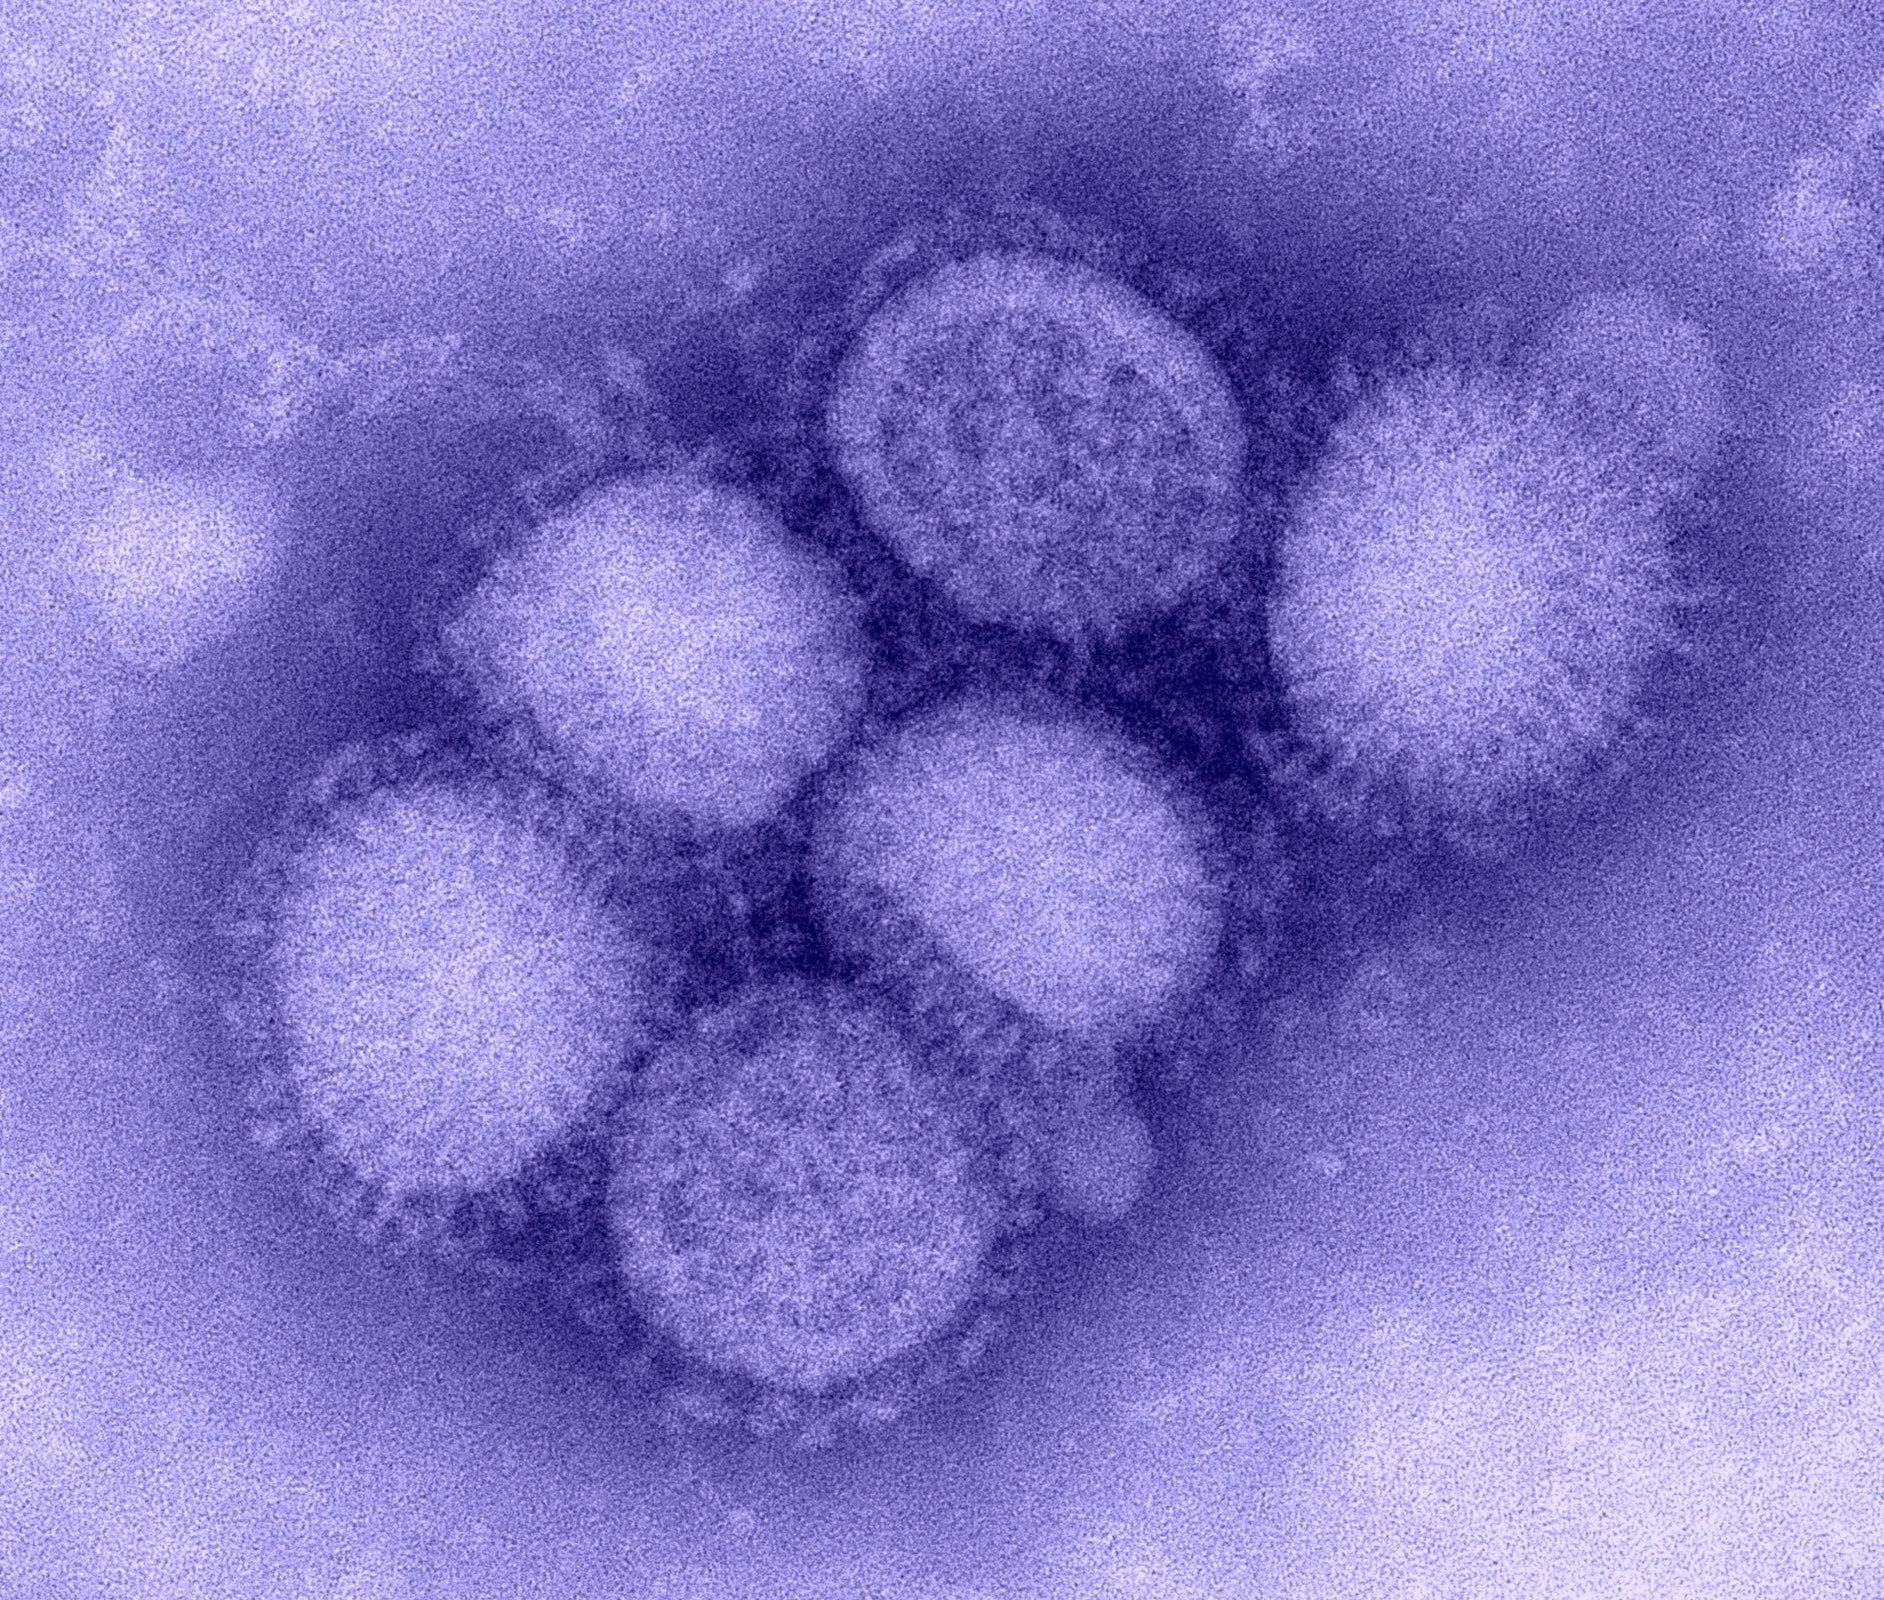 H1N1_influenza_virus-e1486501526309.jpg